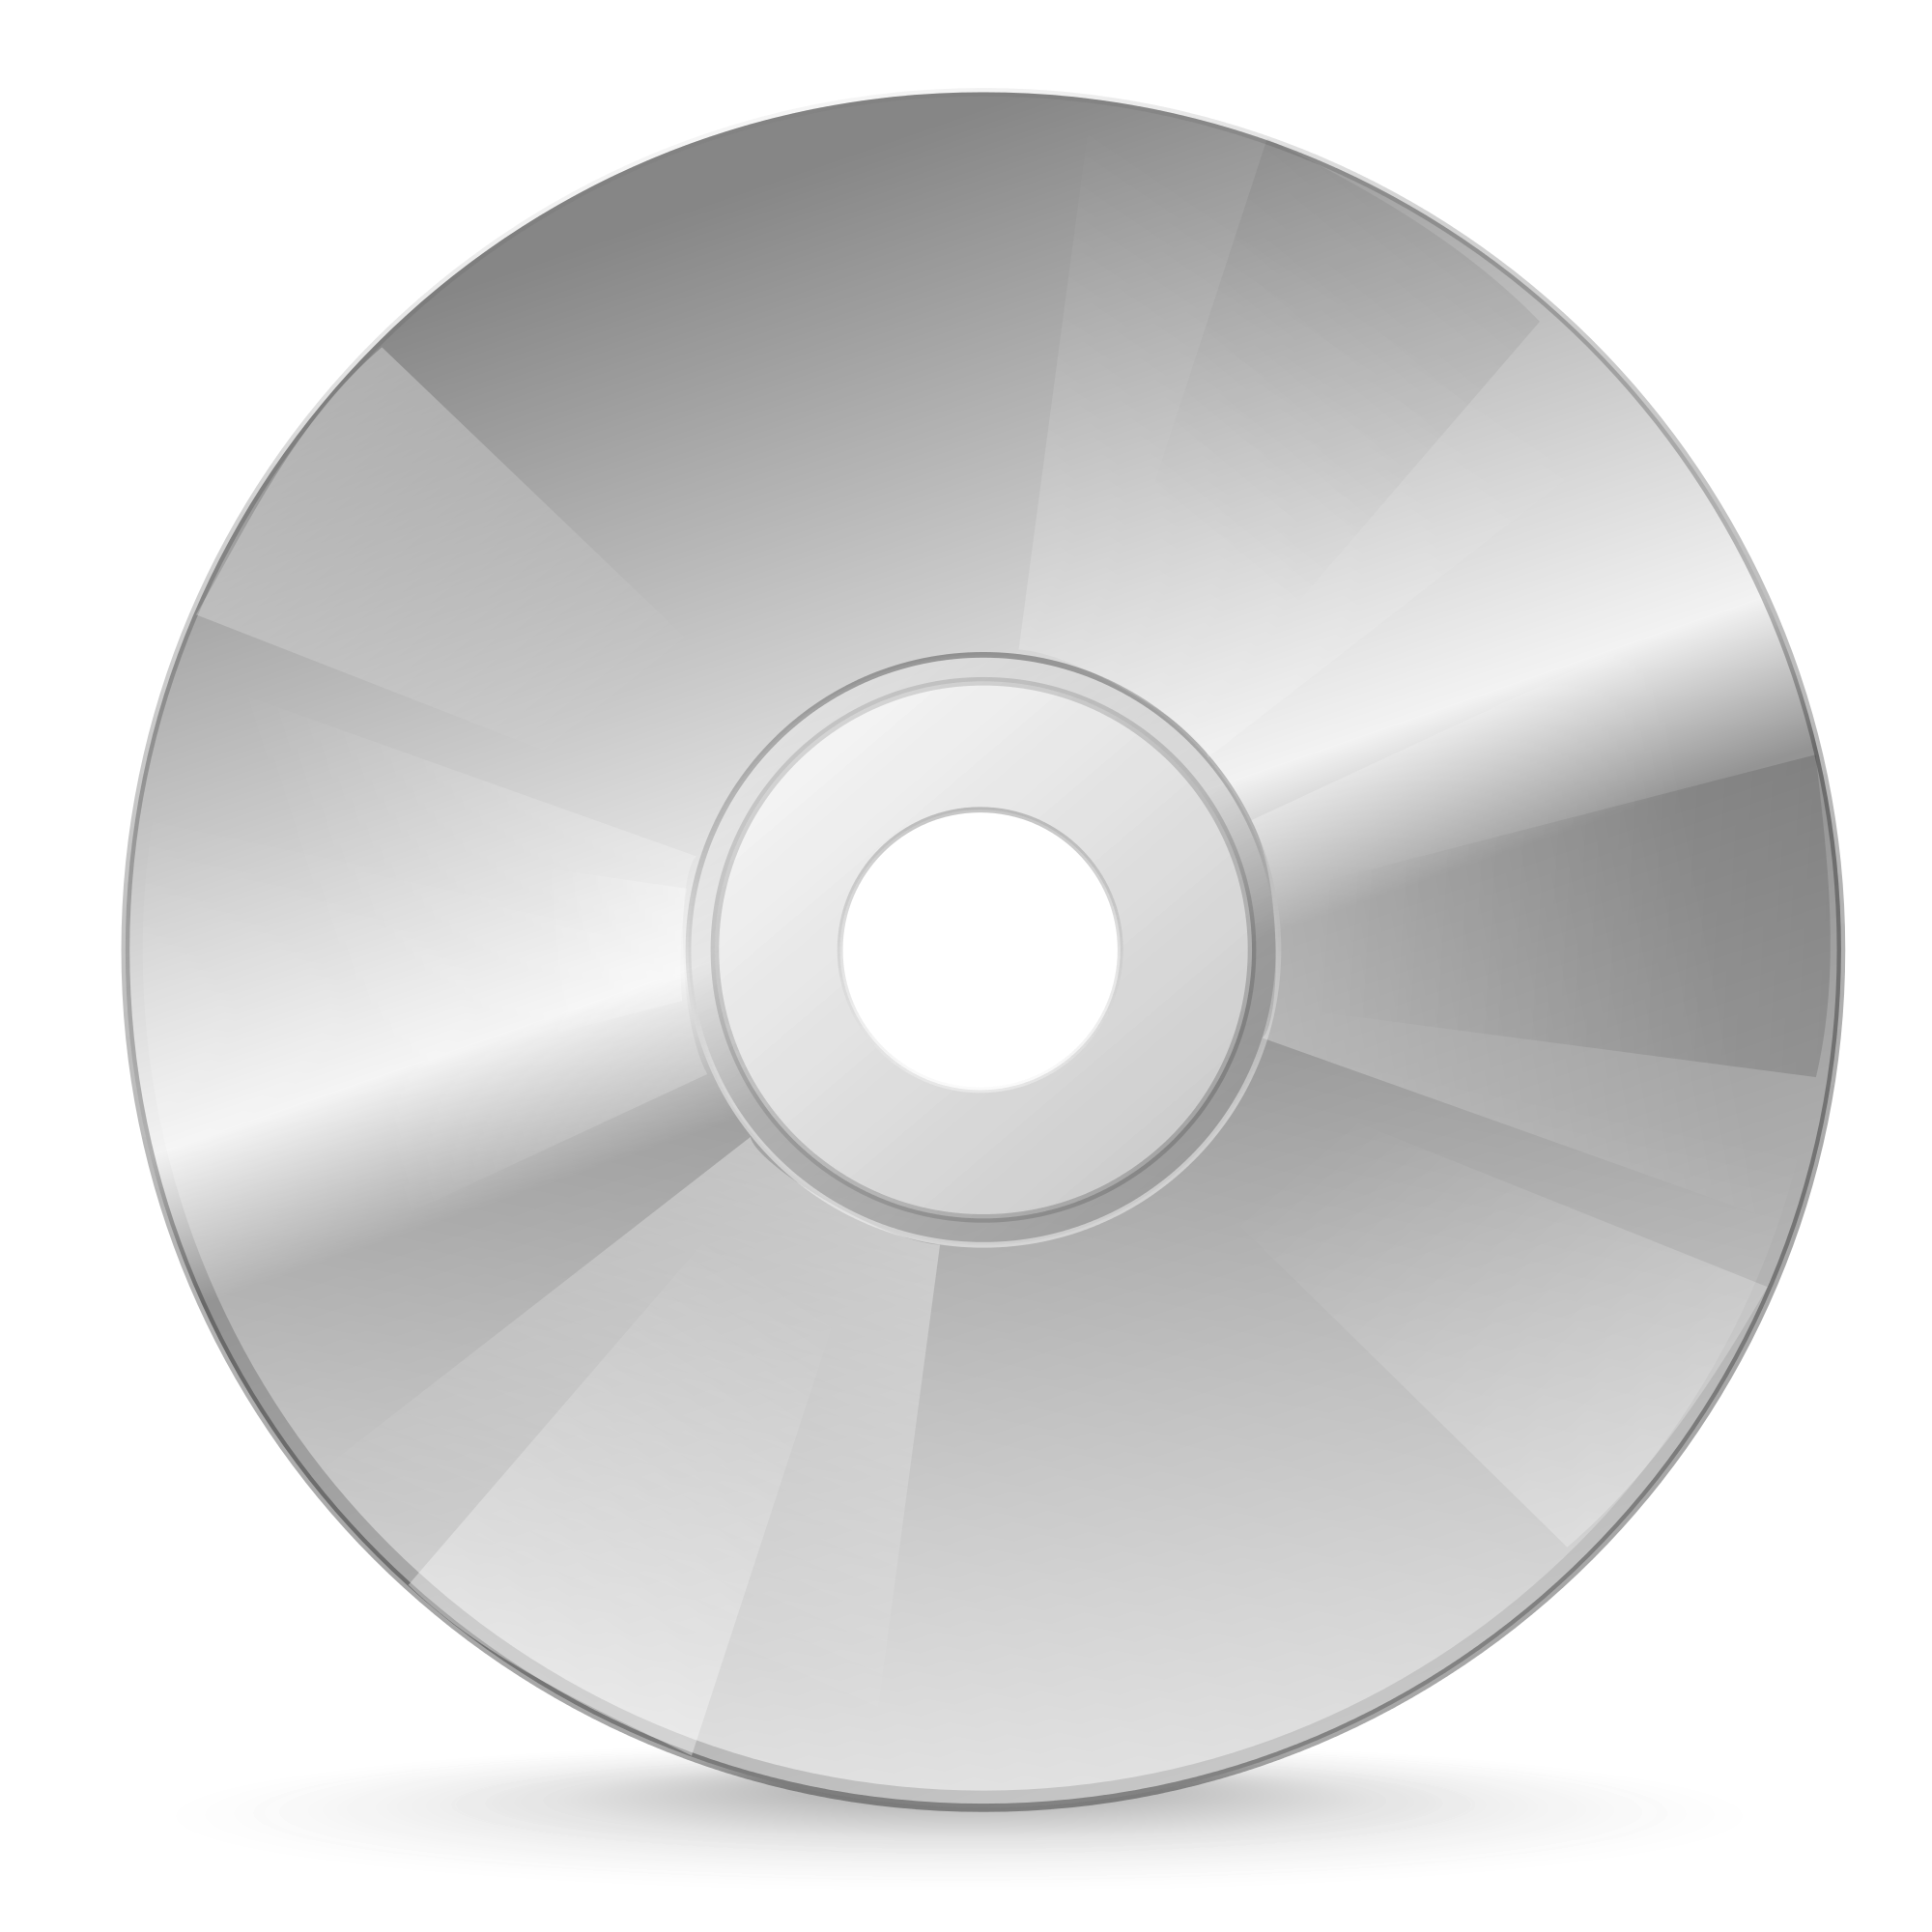 CD - Compact Disk (компакт диск). CD (Compact Disk ROM) DVD (Digital versatile Disc). DVD-диски (DVD – Digital versatile Disk, цифровой универсальный диск),. Двд диск сбоку.